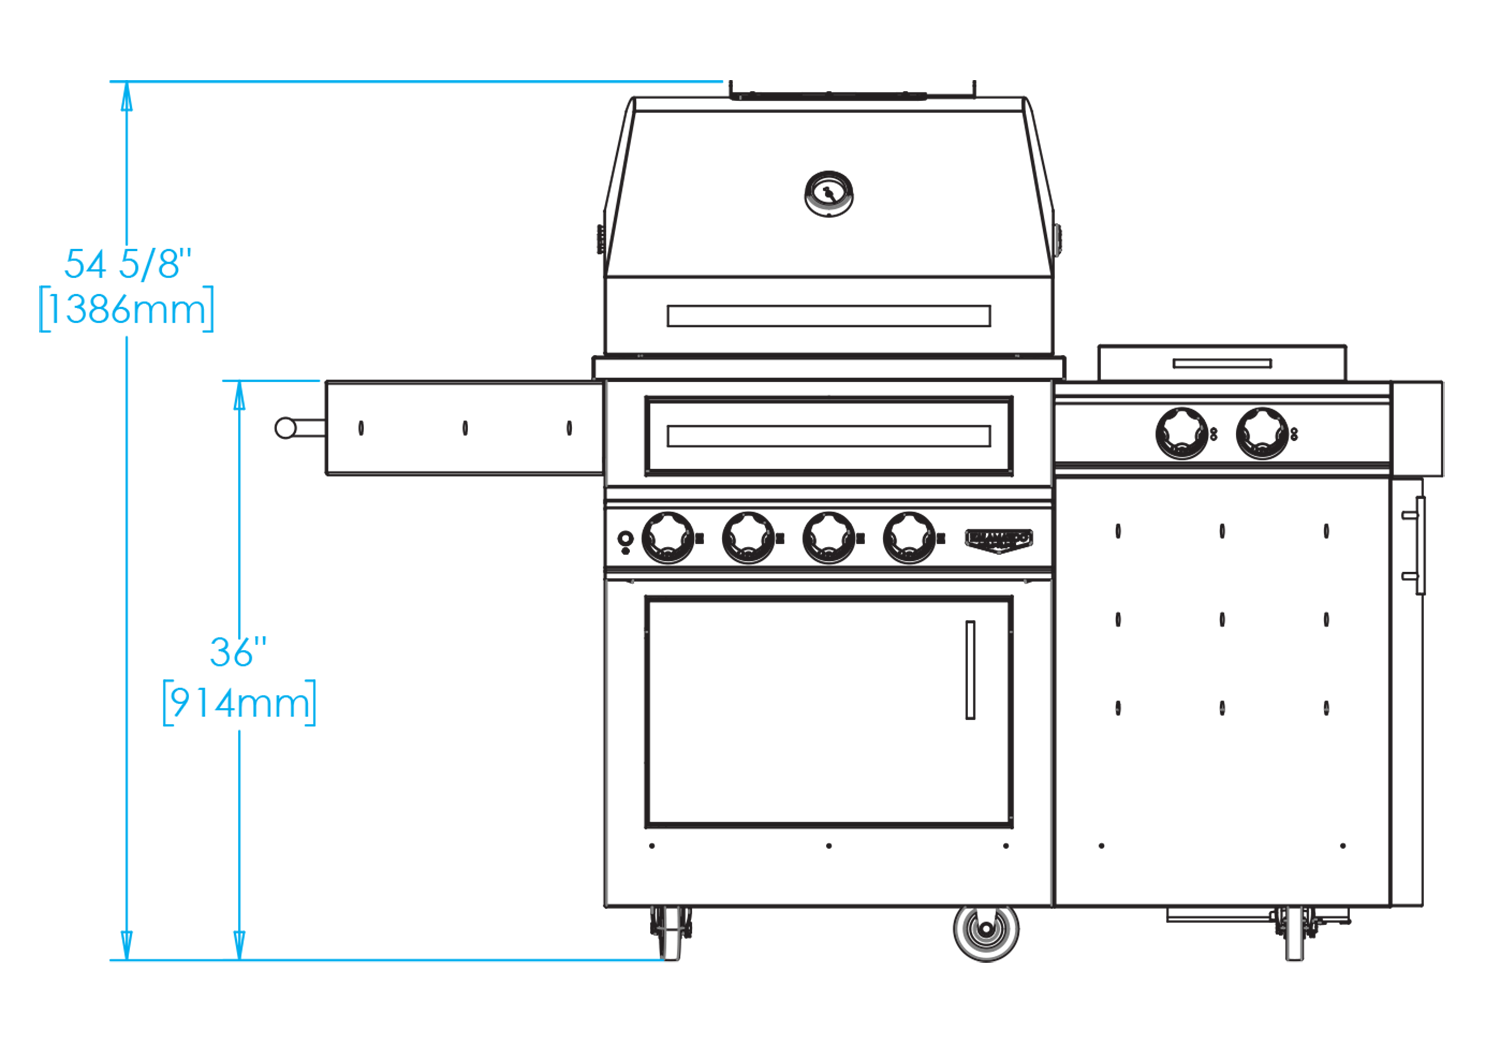 K500HS Freestanding Hybrid Fire Grill with Side Burner Dimensions Image